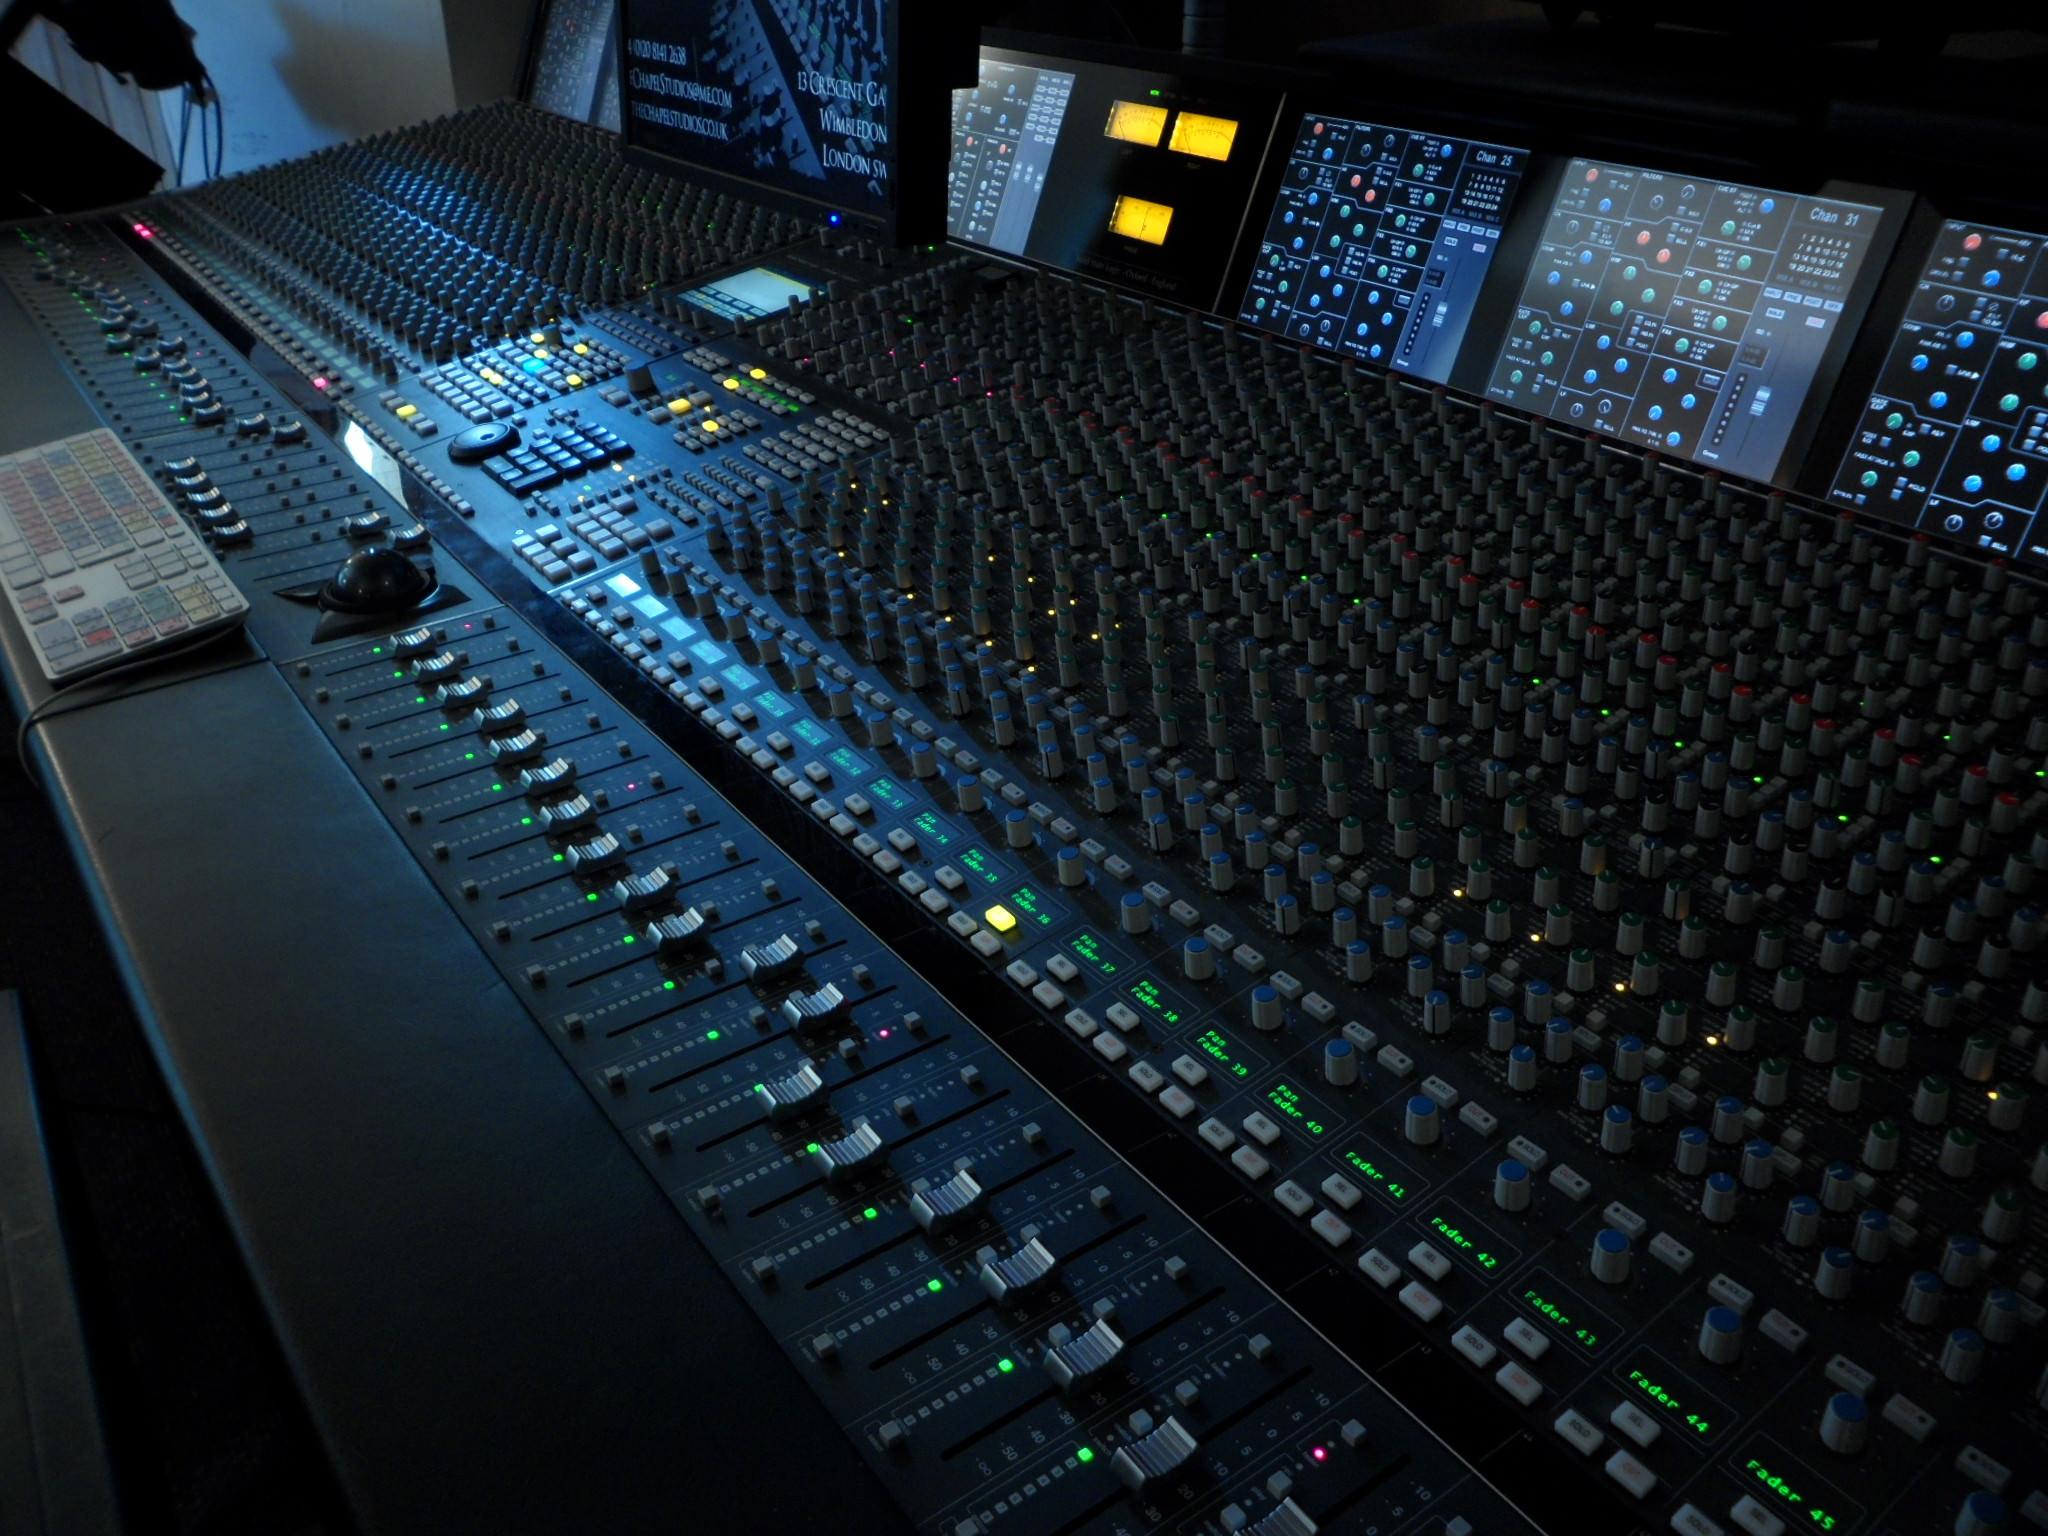 Gallery Recording Studio, Wimbledon, London